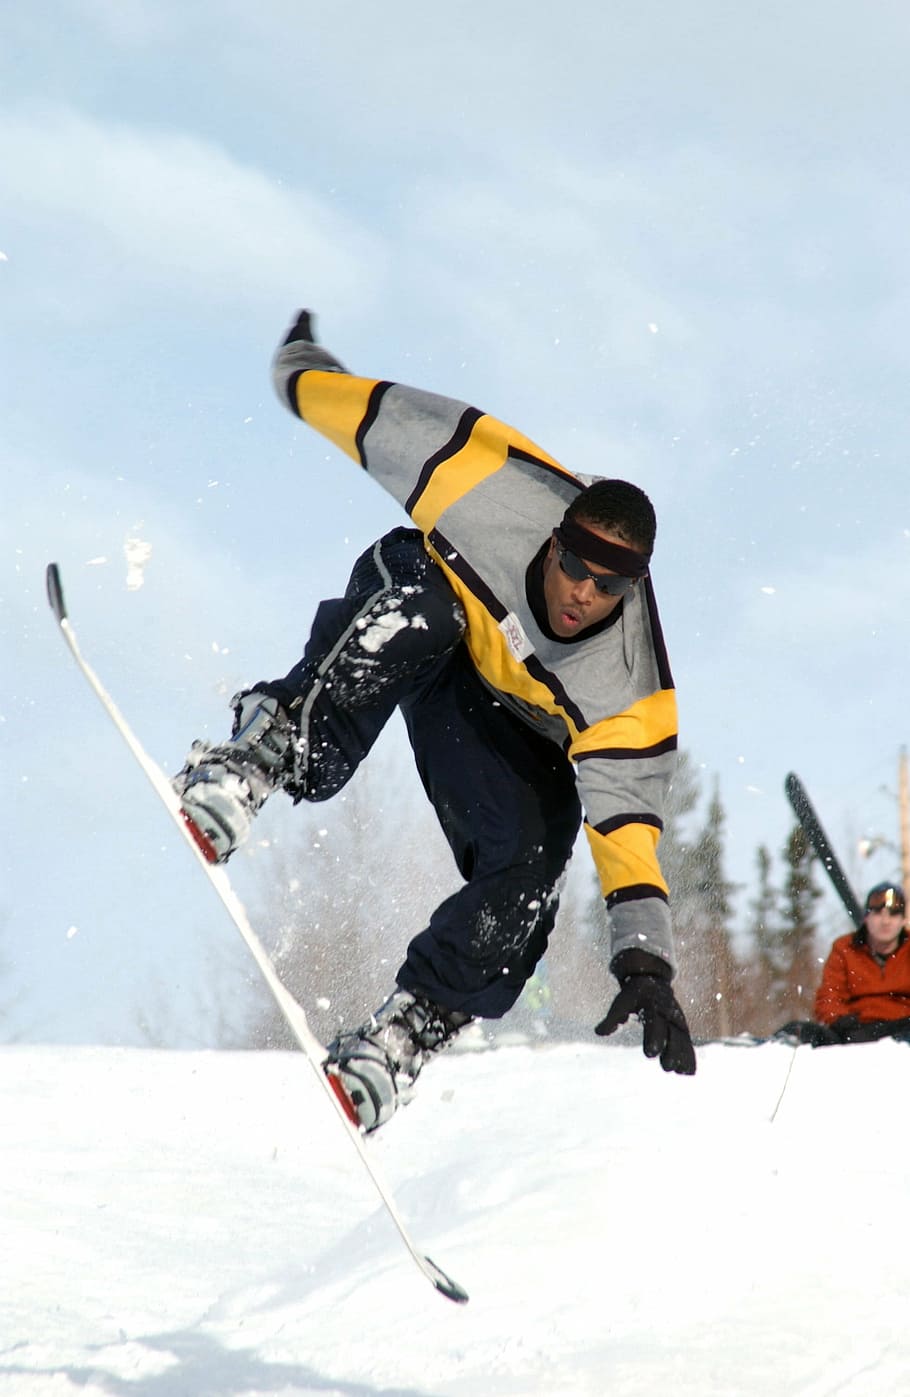 man snowboarding, daytime, snowboarding, snowboarder, sport, fun, mountain, snowboard, winter, snow